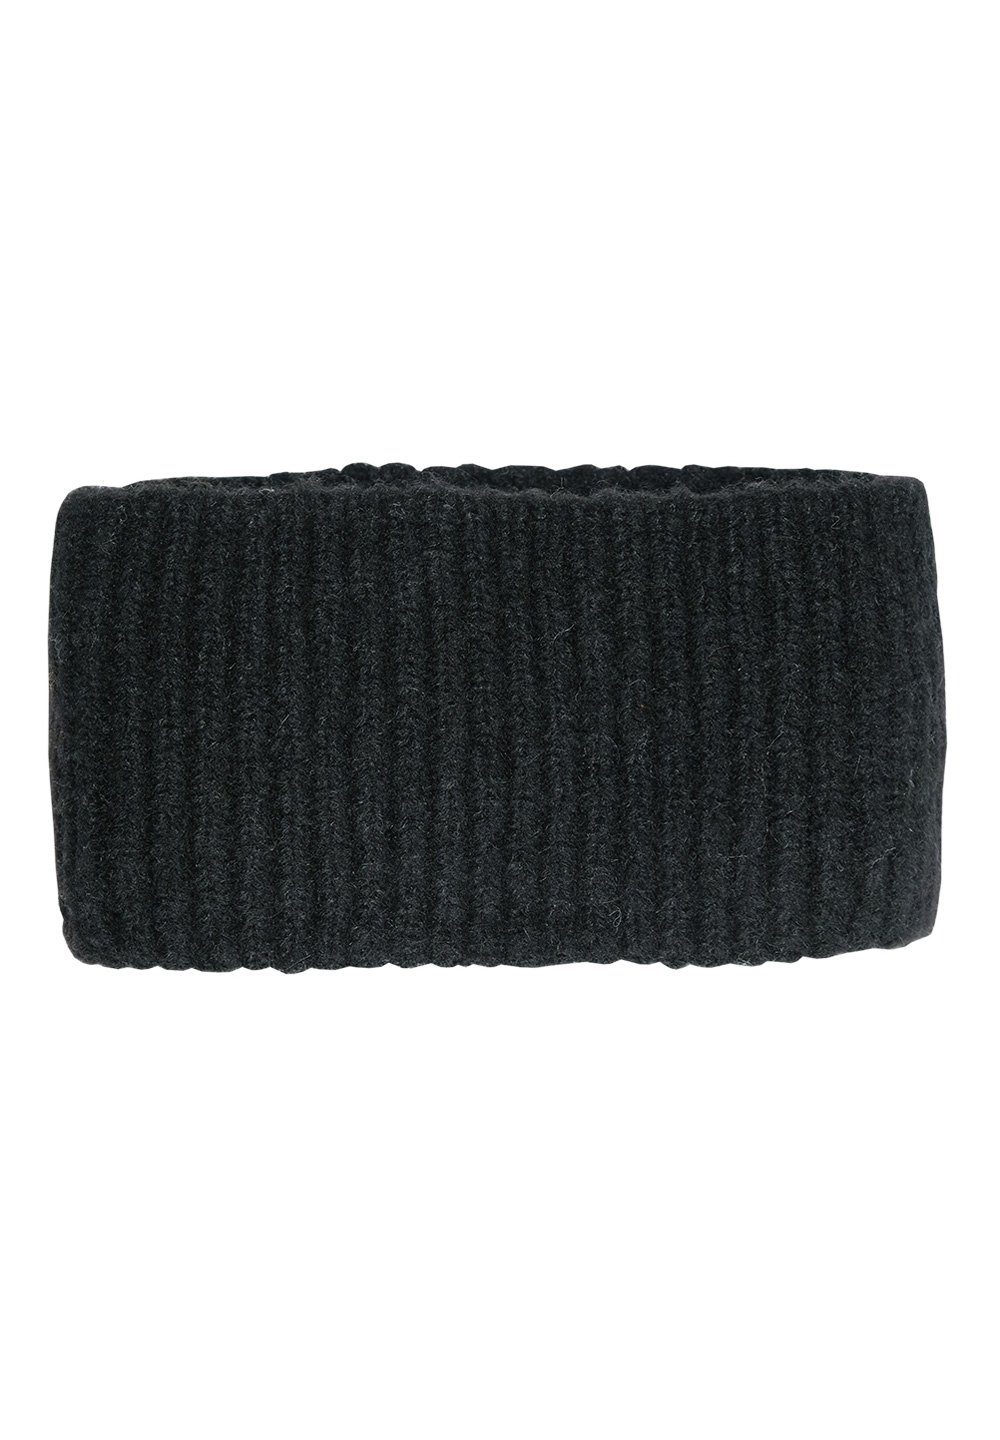 CAPO Stirnband Strickstirnband, soft Fleecfutter Made in Europe black